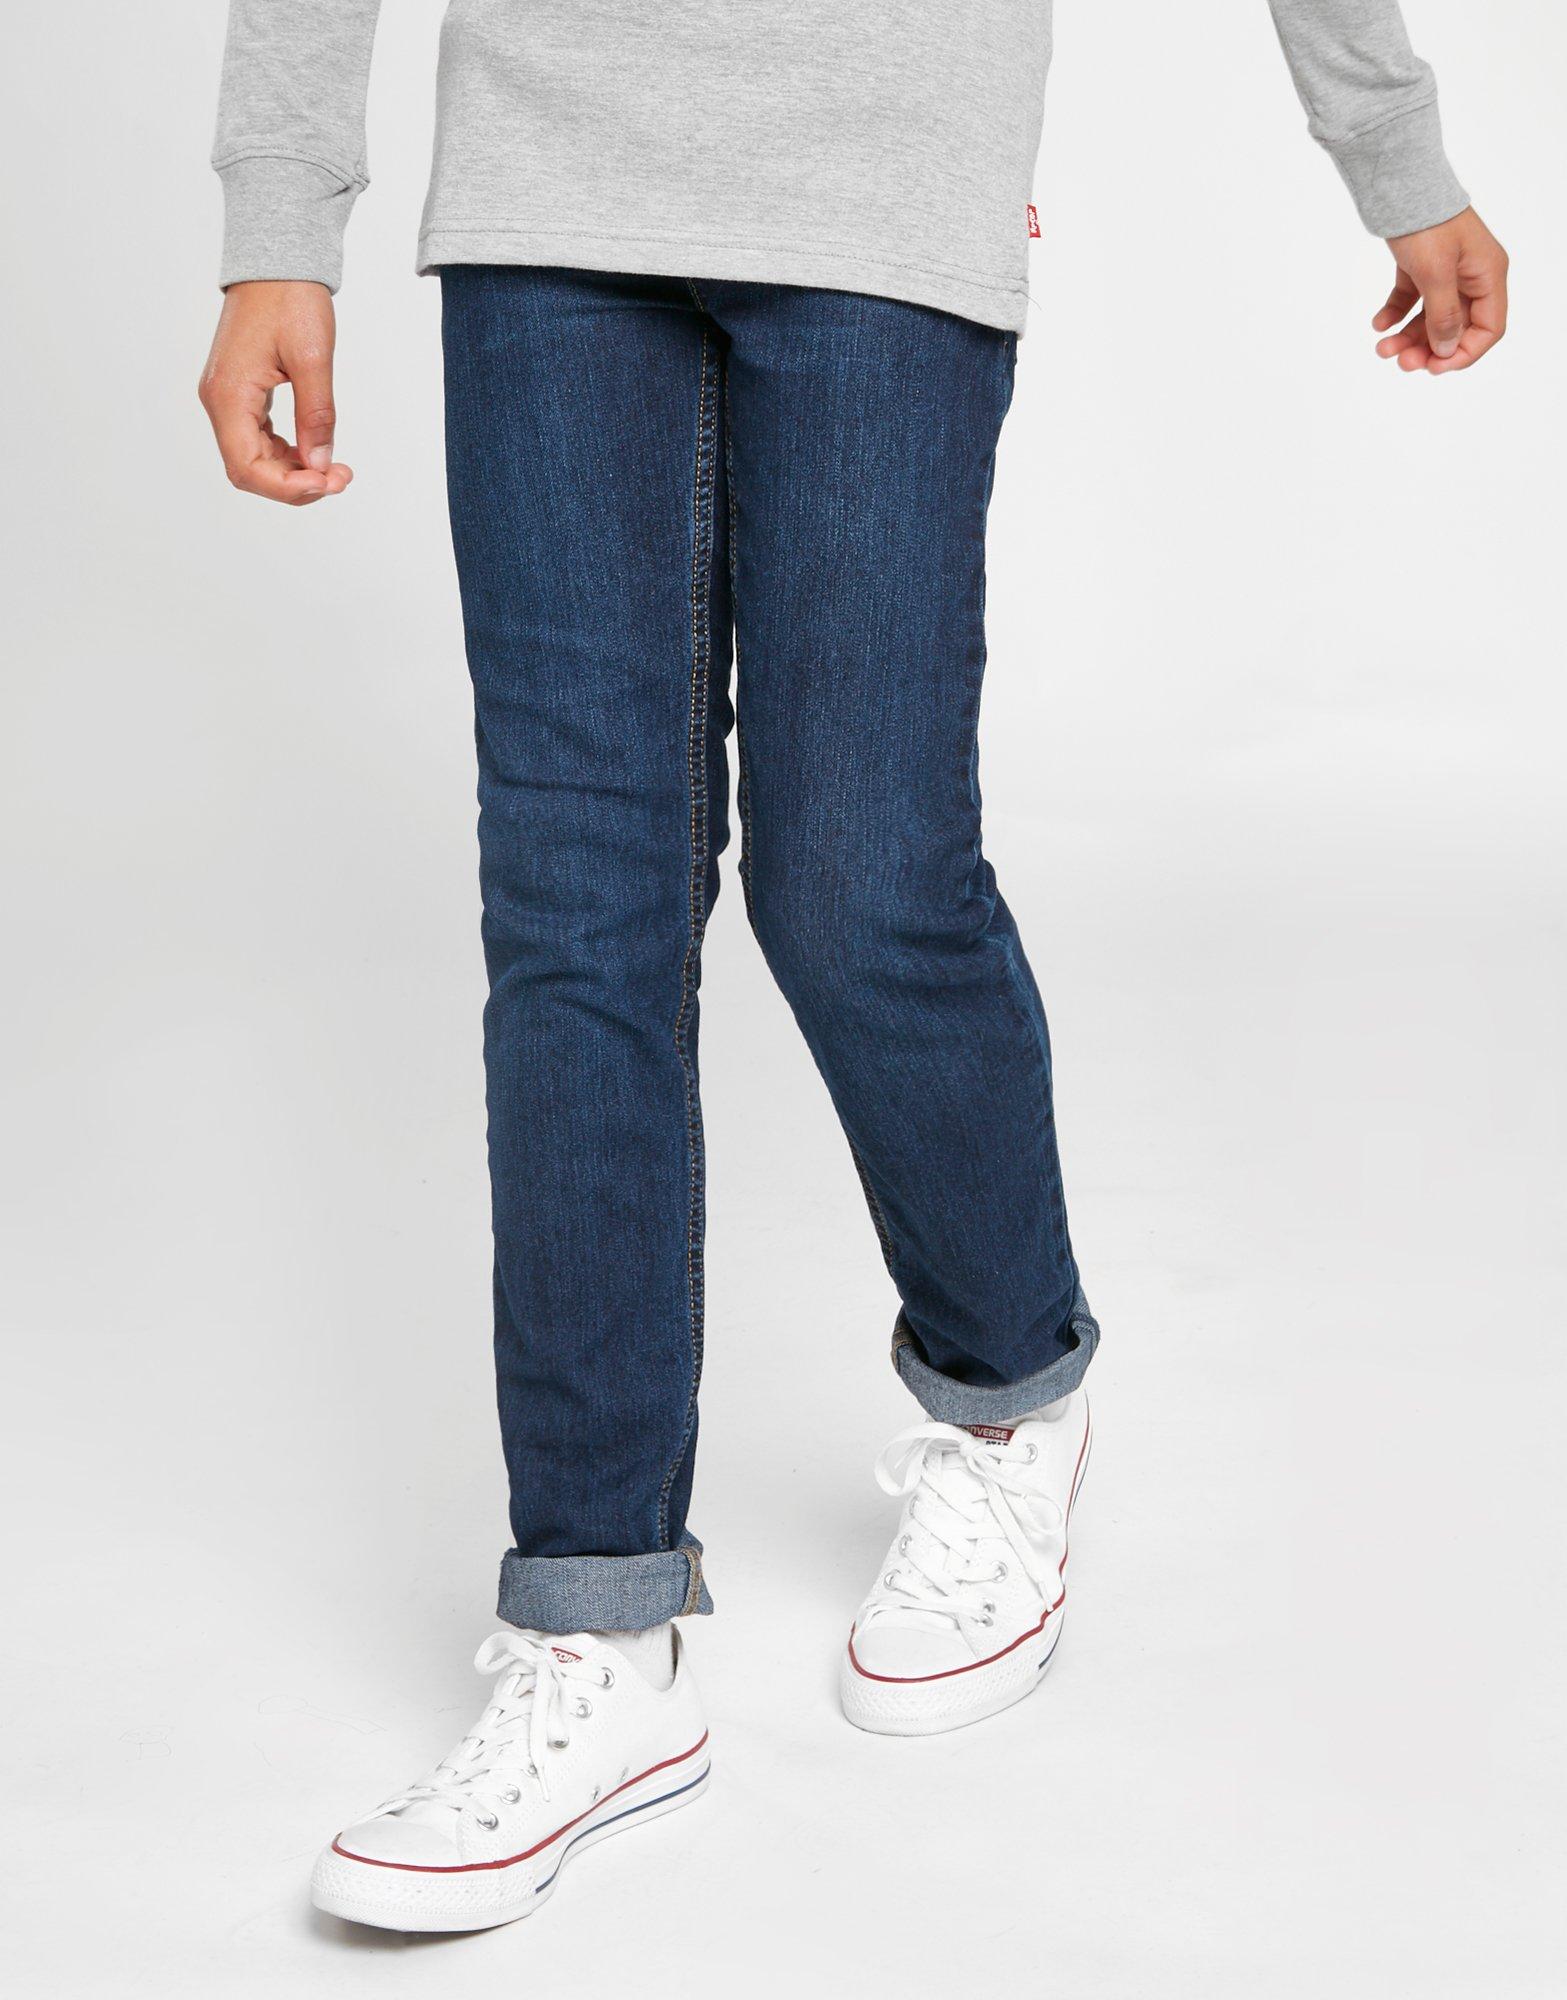 junior levis skinny jeans